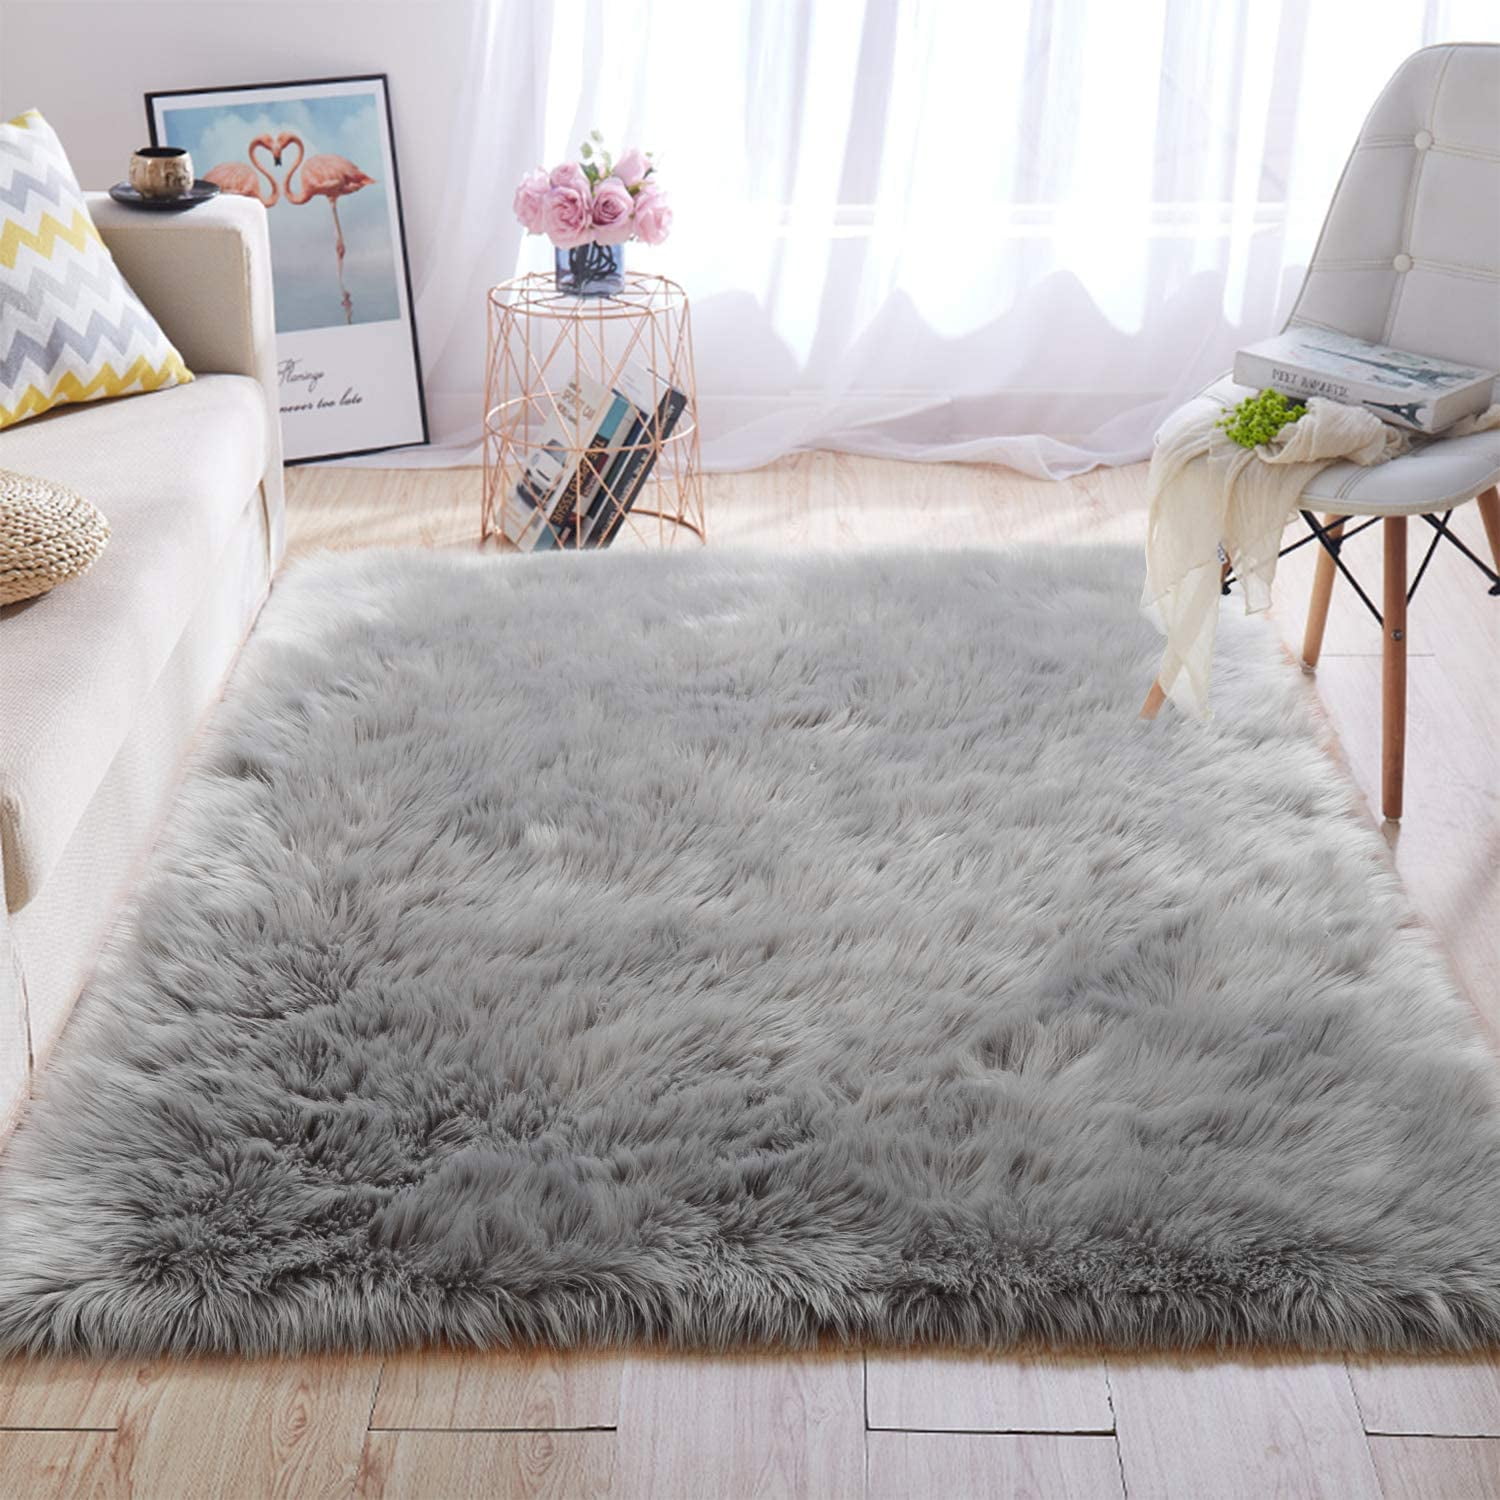 Details about   Imitation Wool Sheepskin Rugs Fur Carpet Mat Non Slip Bedroom Shaggy Soft Mats 